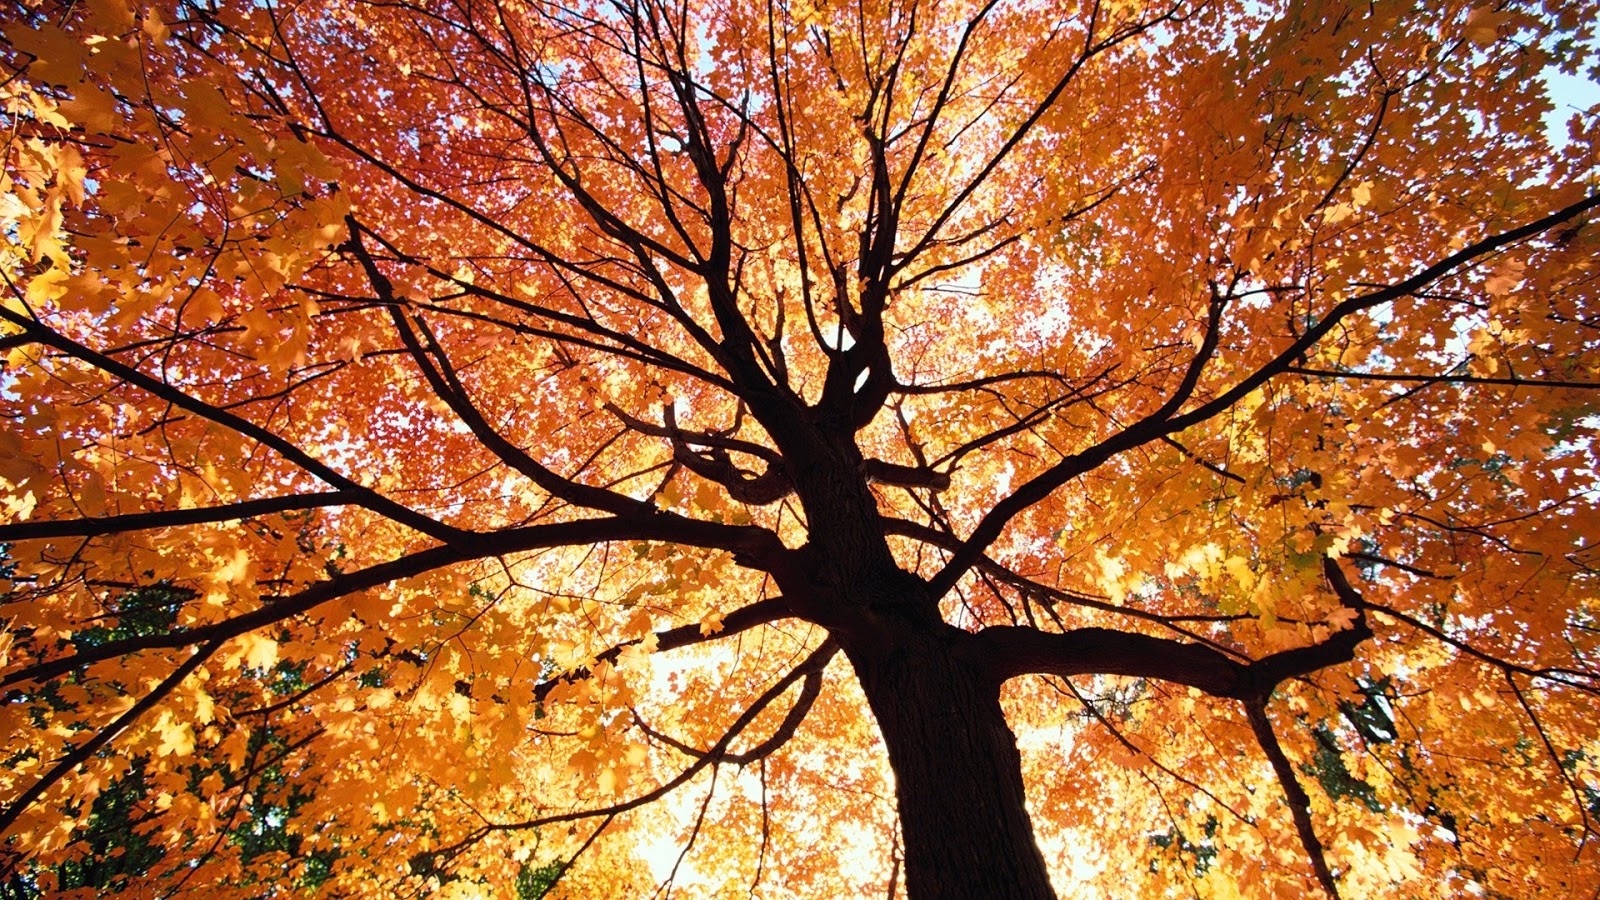 fondos de pantalla de árboles de otoño,árbol,planta leñosa,hoja,naturaleza,otoño